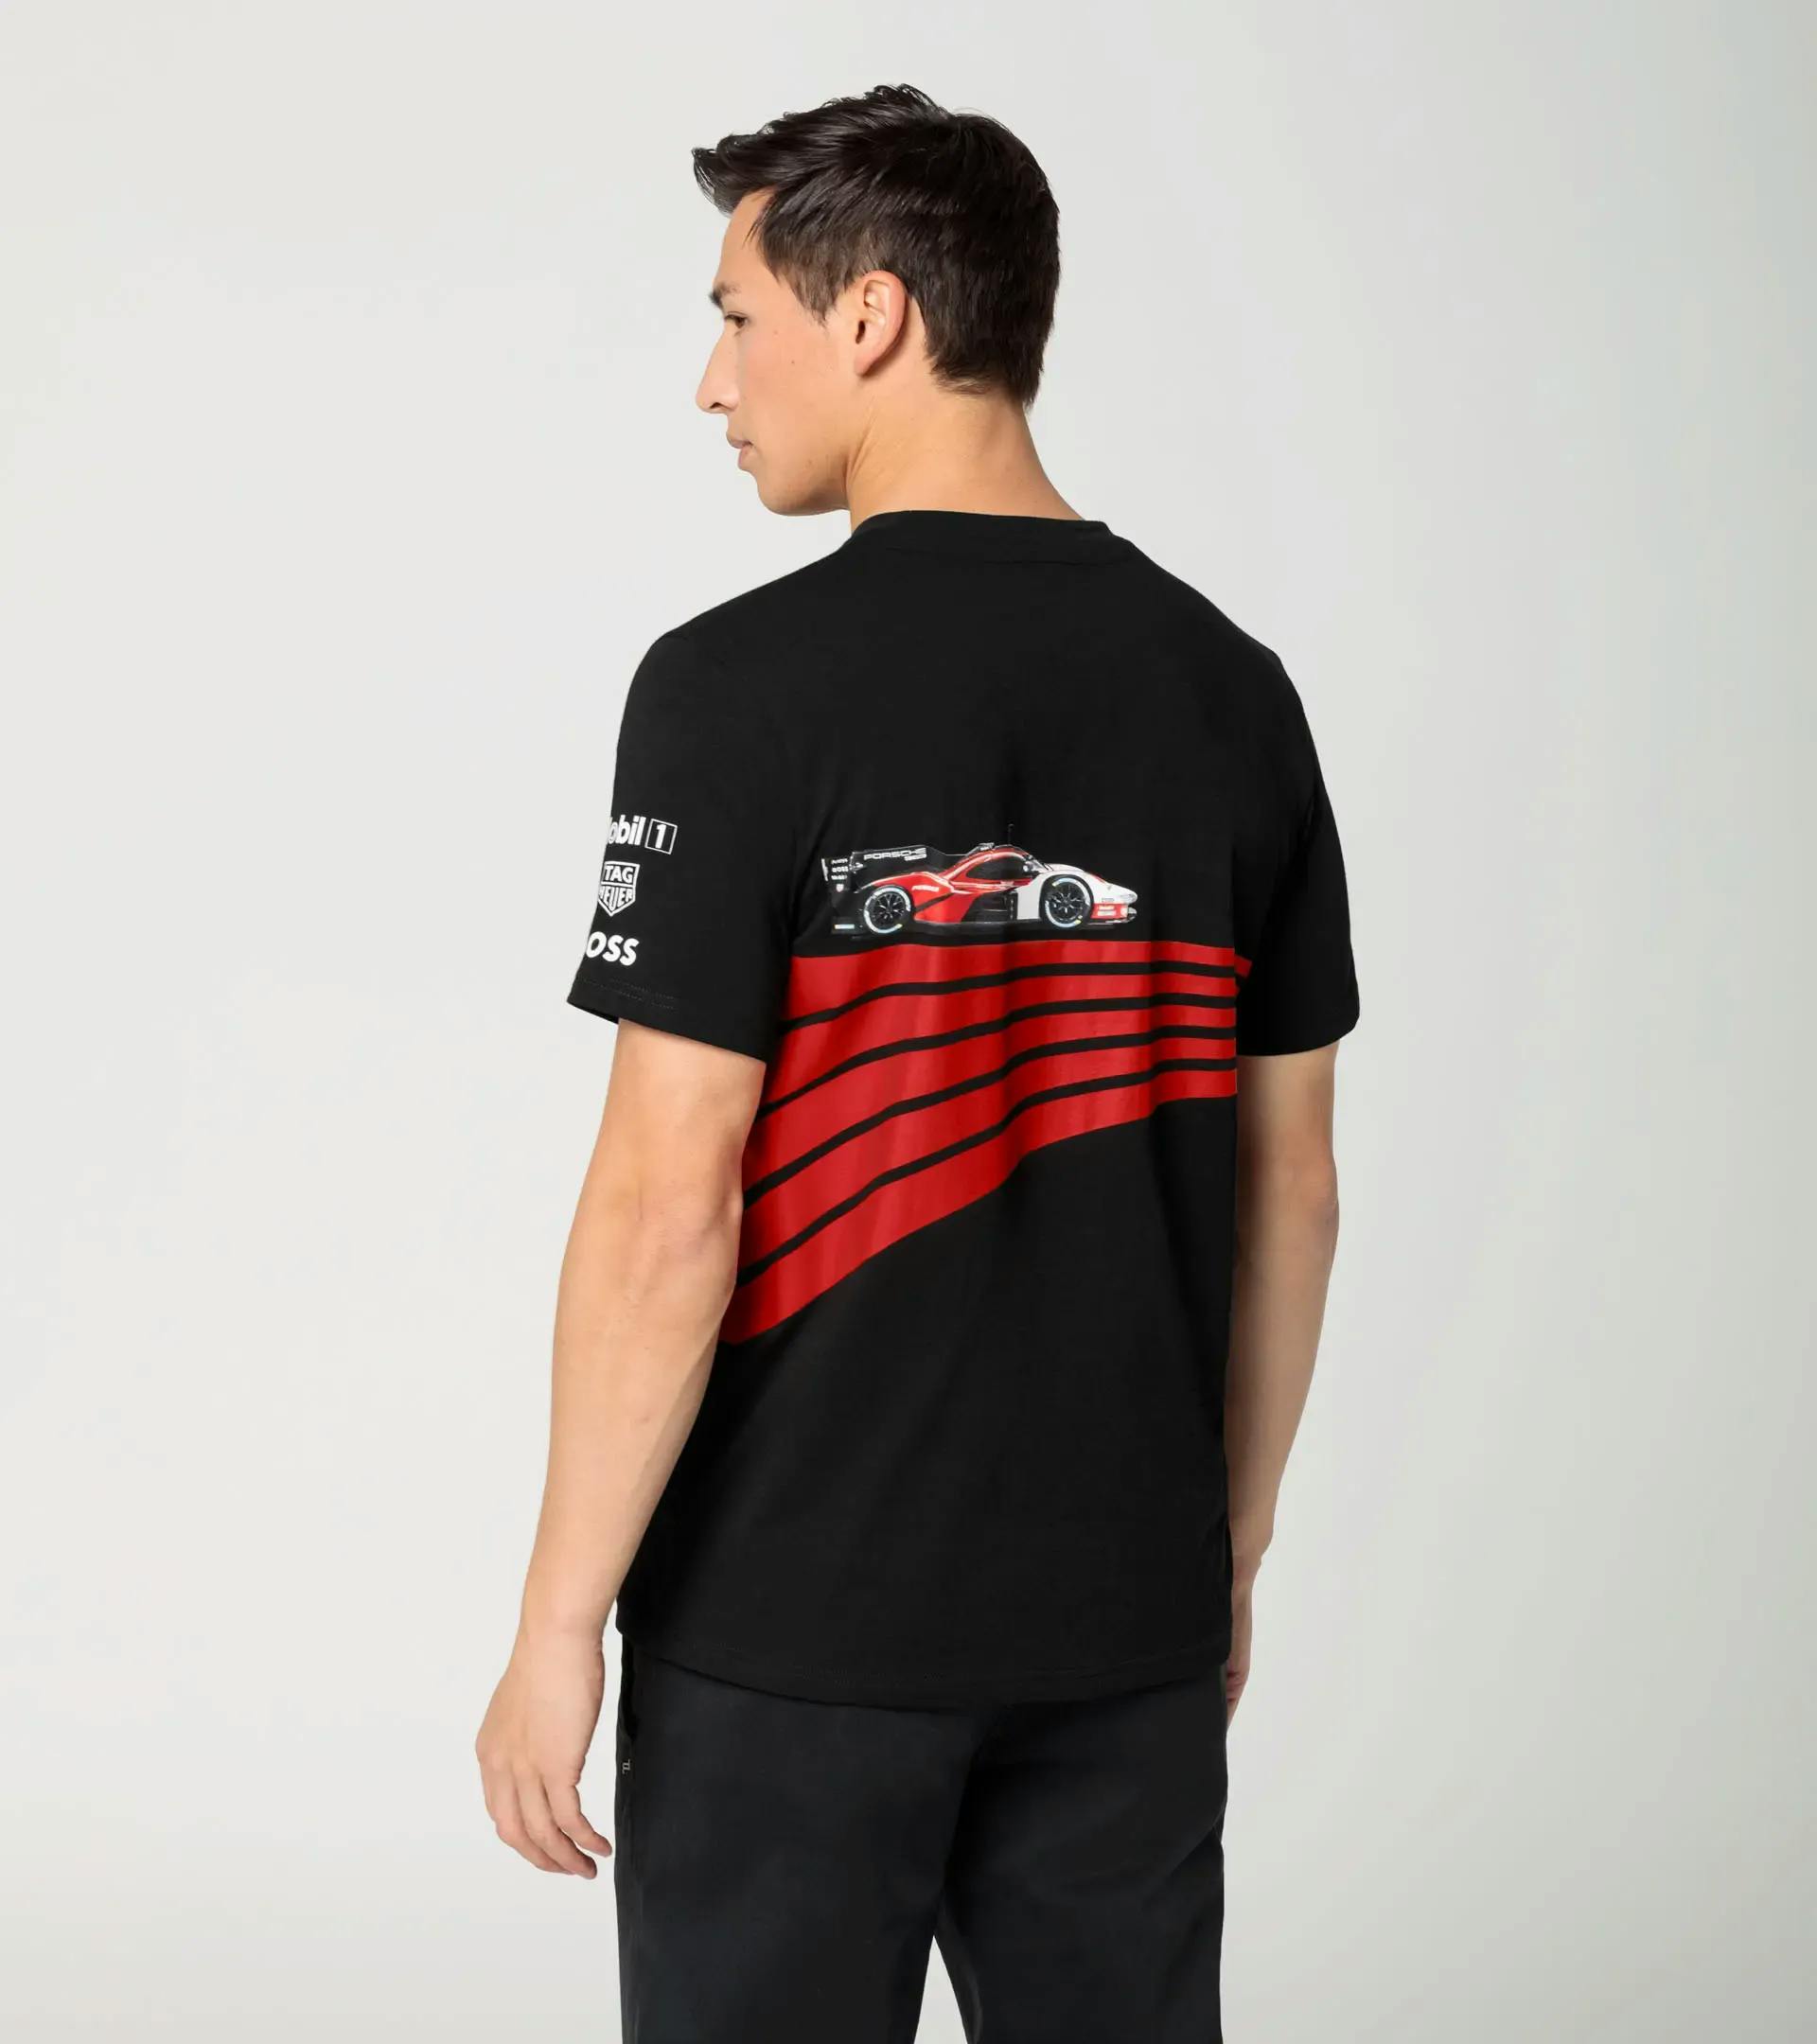 Camiseta unisex – Porsche Penske Motorsport 3